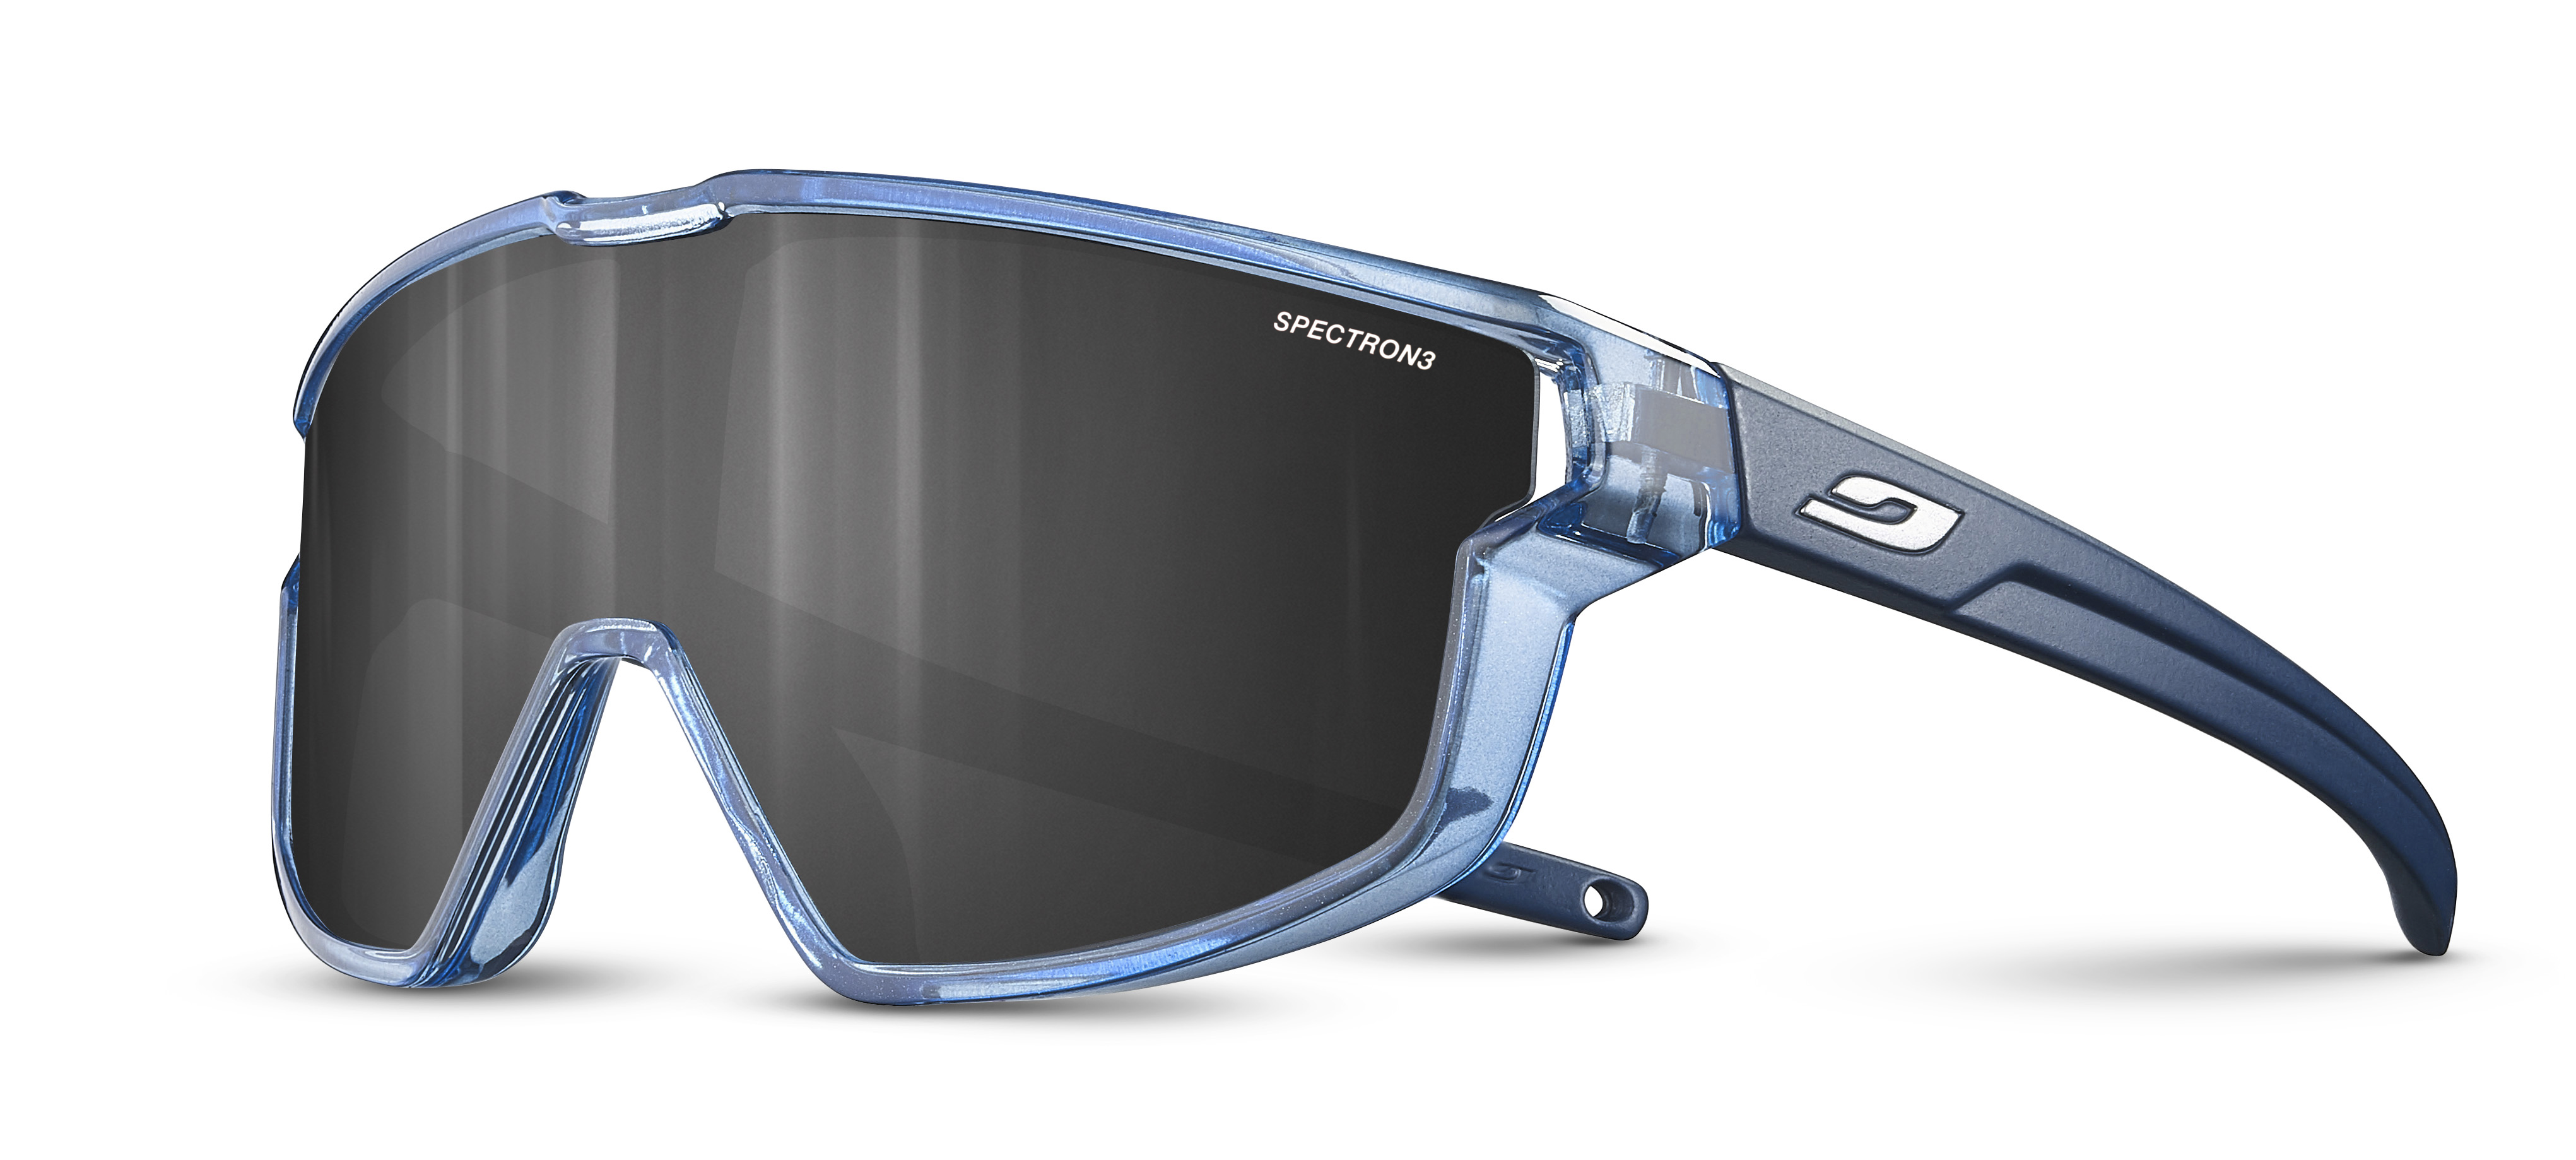 Sunglasses Julbo Js560 fury mini, blue colour - Doyle